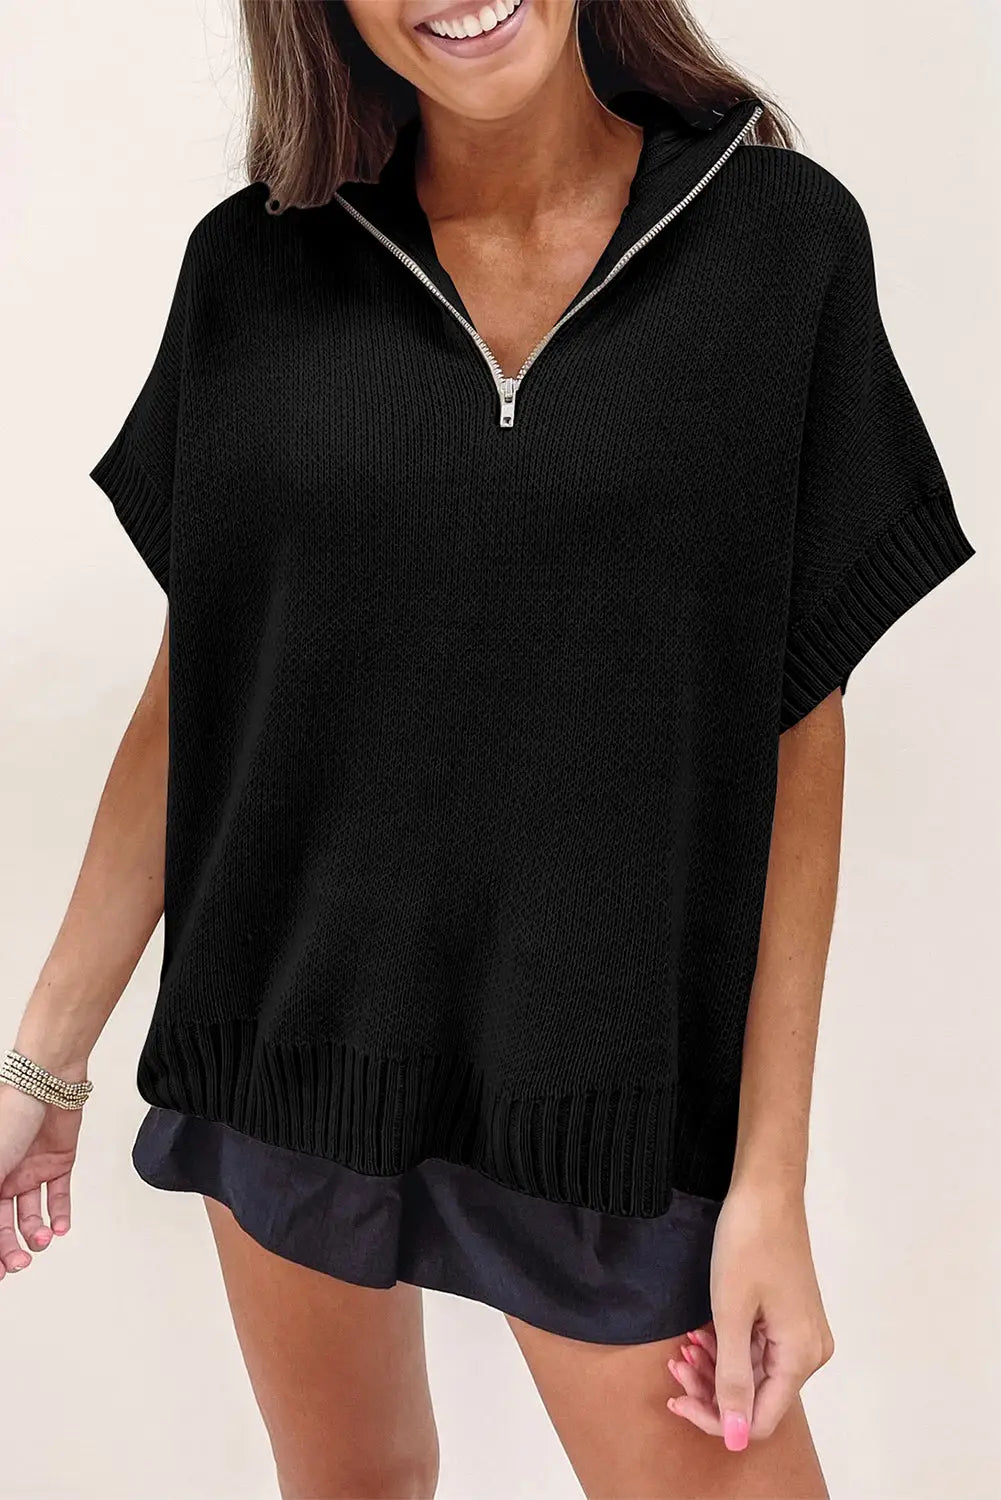 Black quarter zip short batwing sleeve sweater - l / 55% acrylic + 45% cotton - sweaters & cardigans